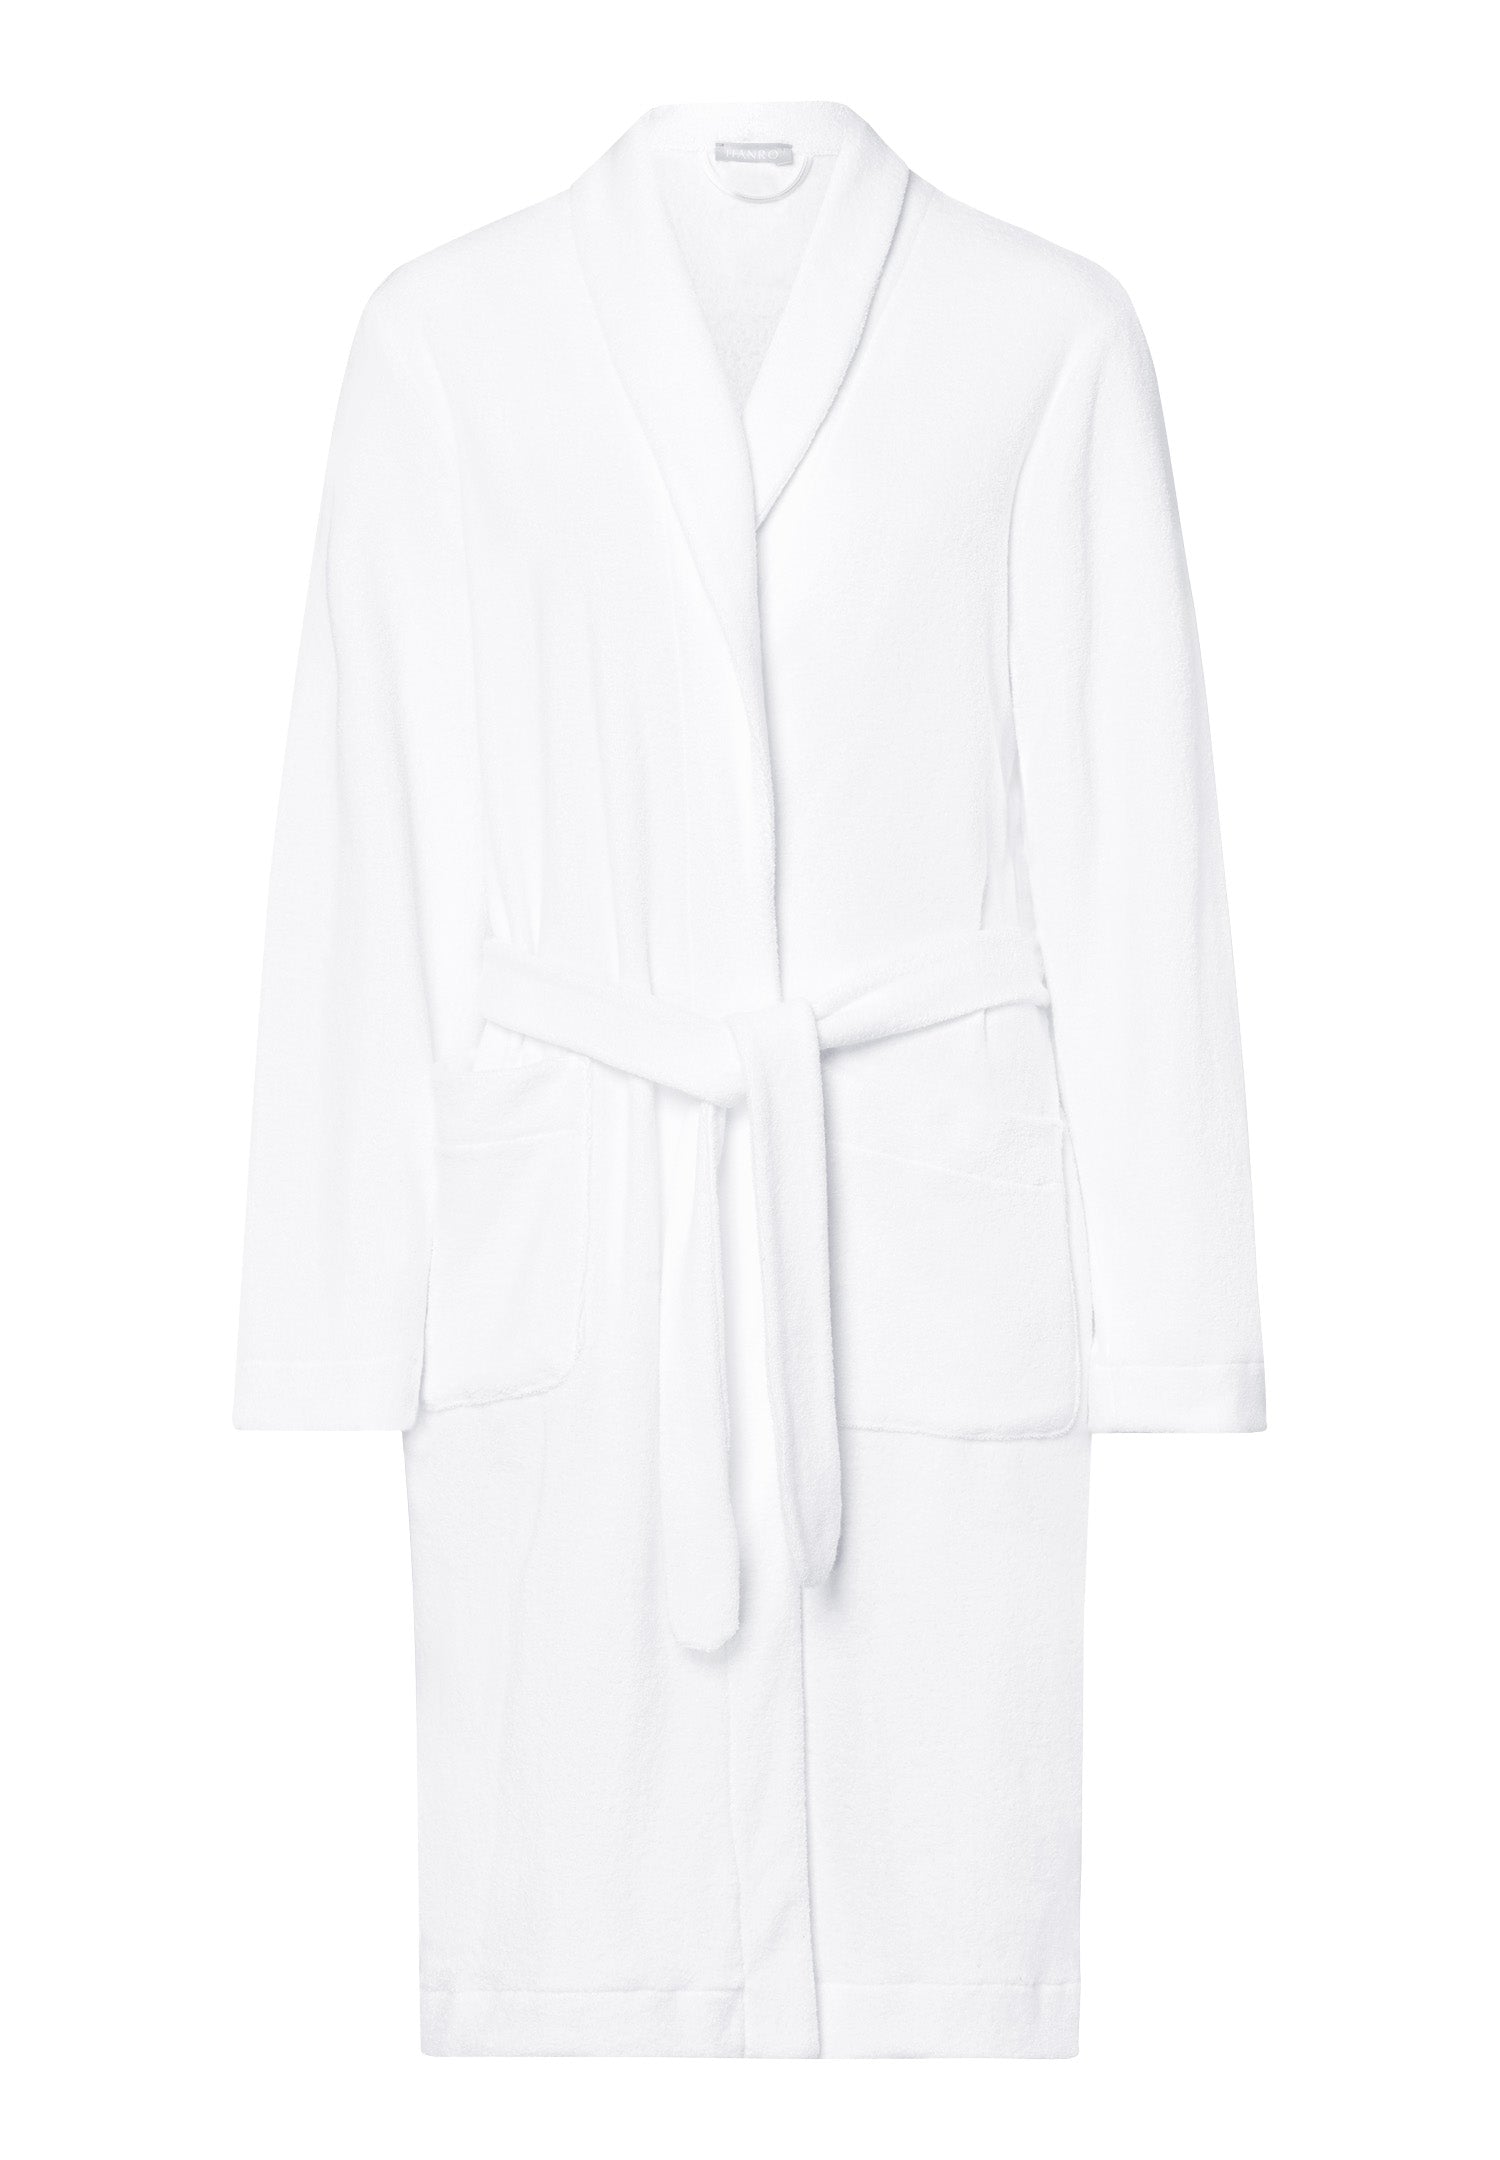 77127 Robe Selection Short Robe - 101 White